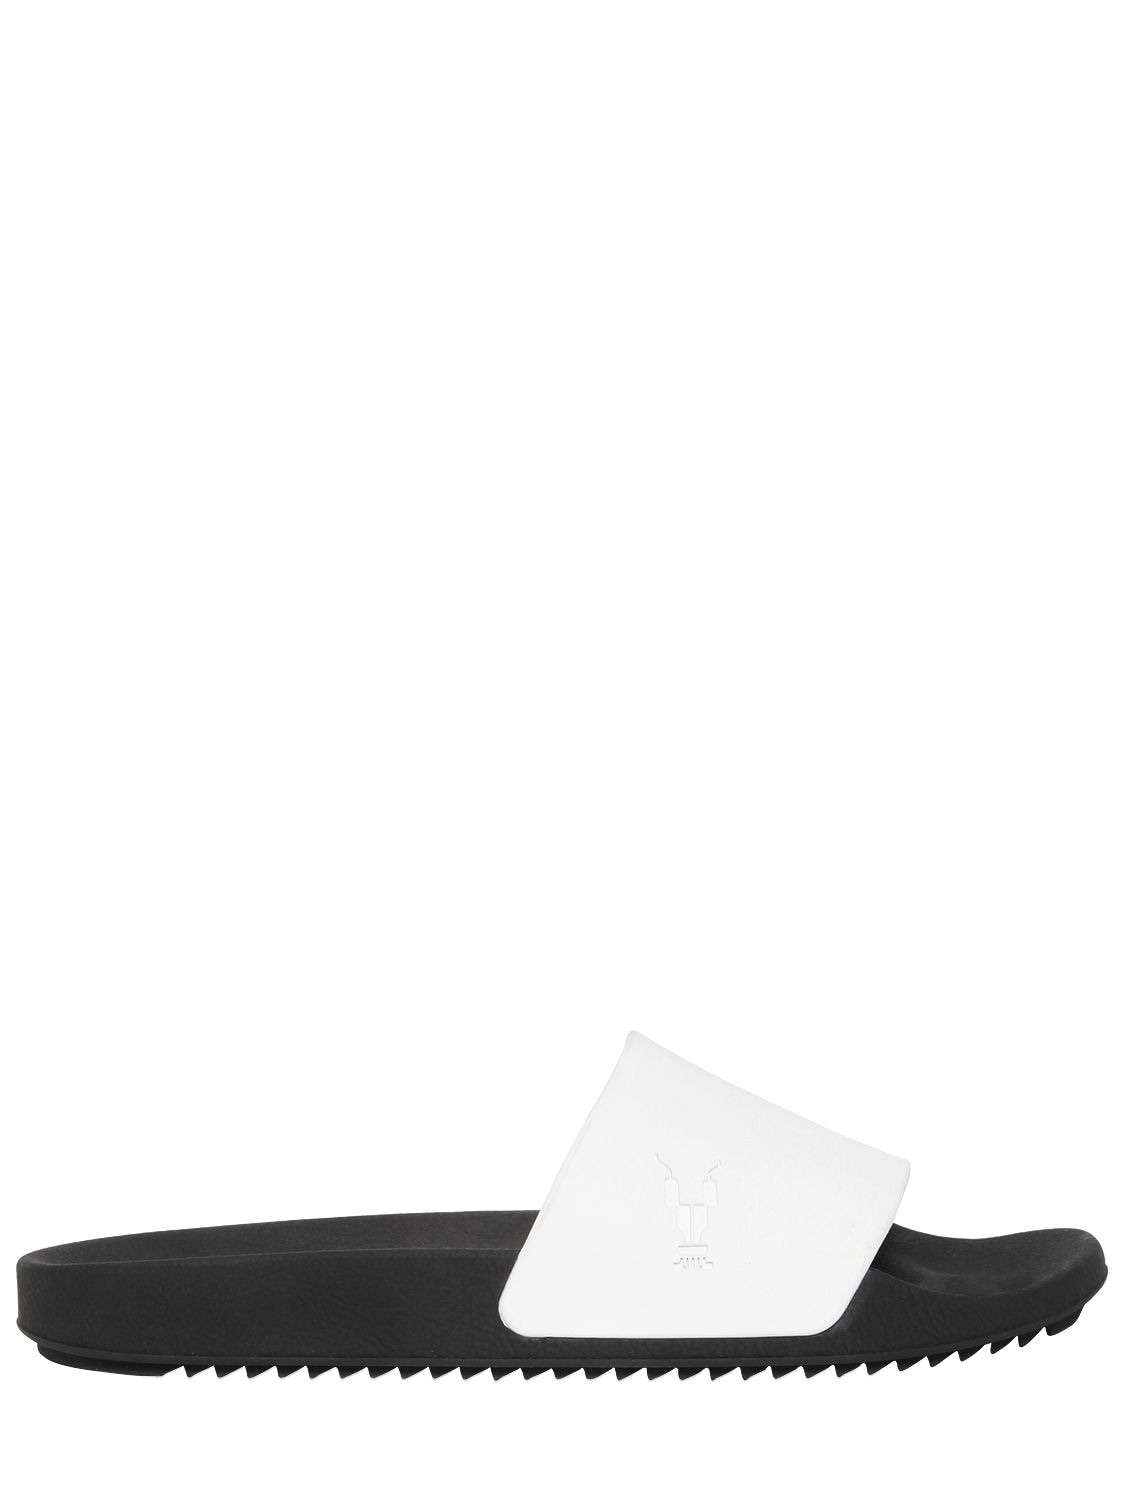 Rick Owens Drkshdw Logo Rubber Slide Sandals In Black/milk